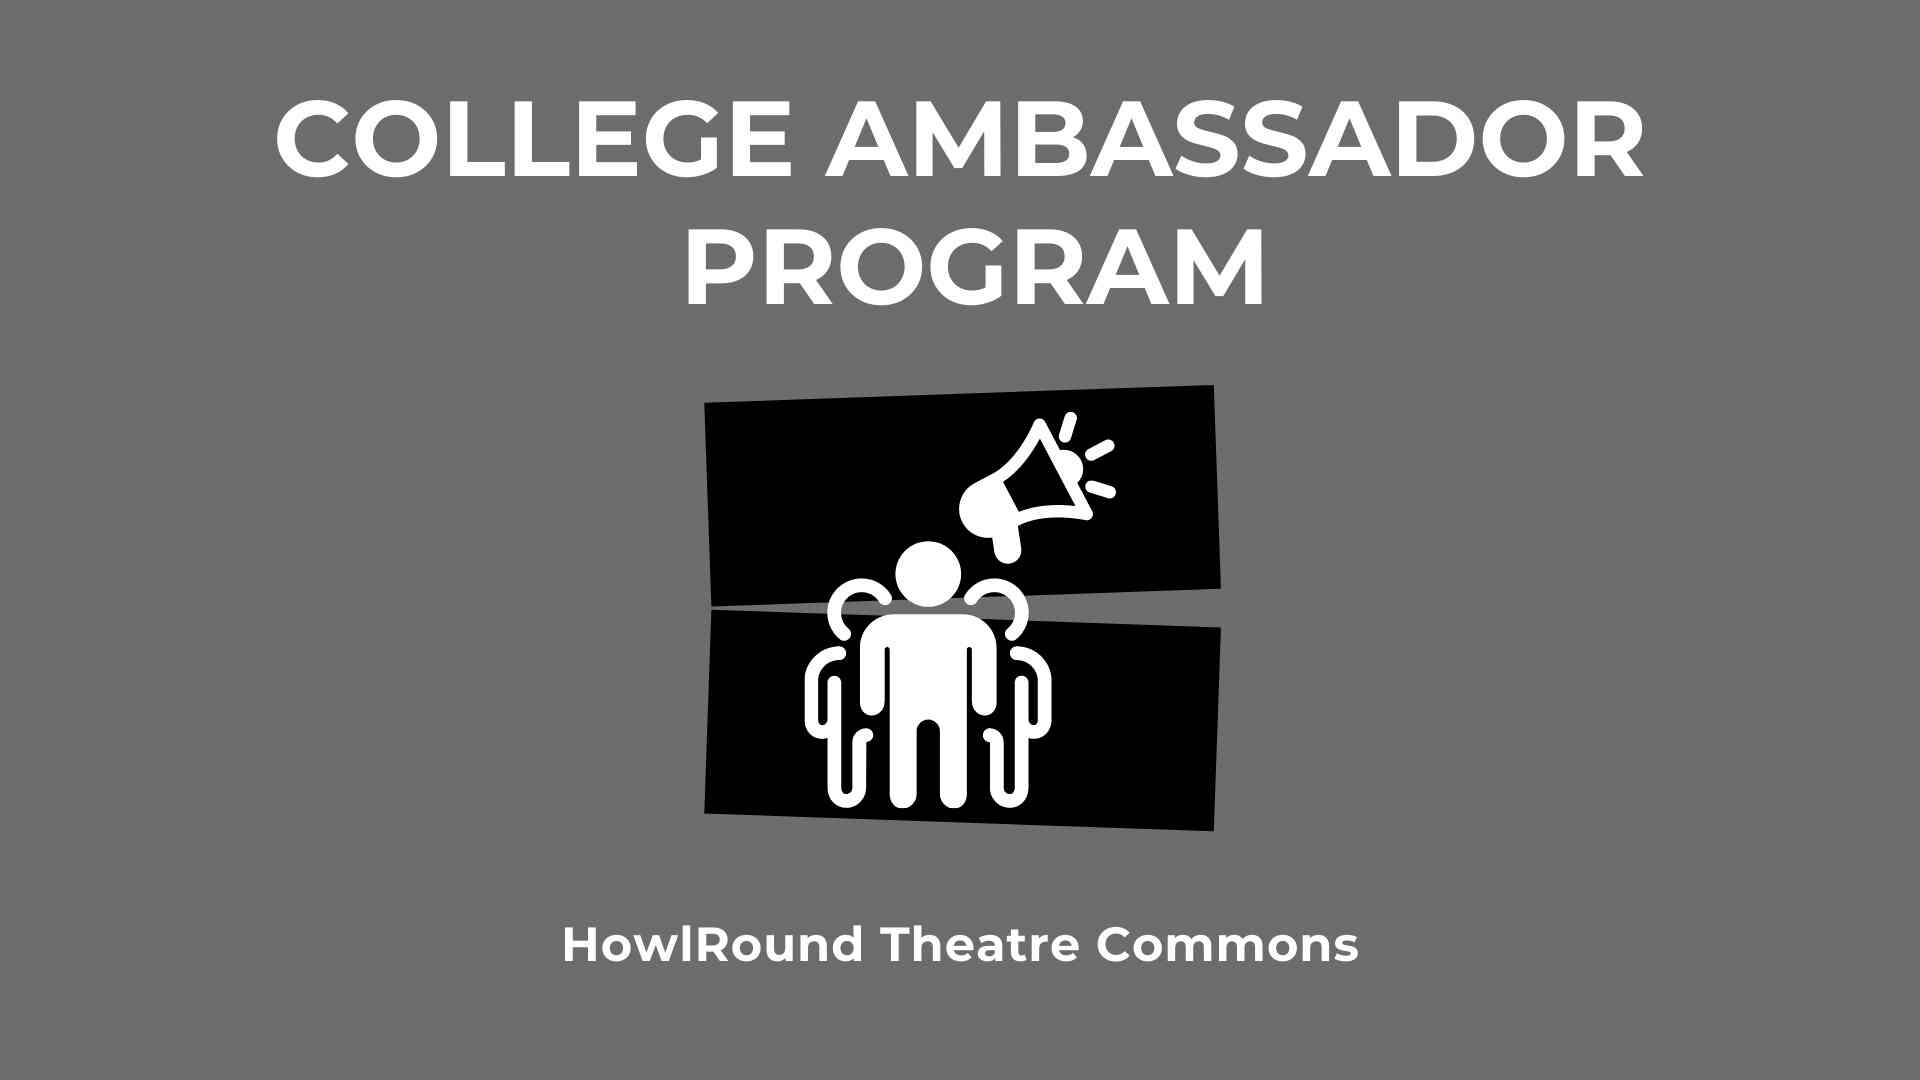 College Ambassador program logo